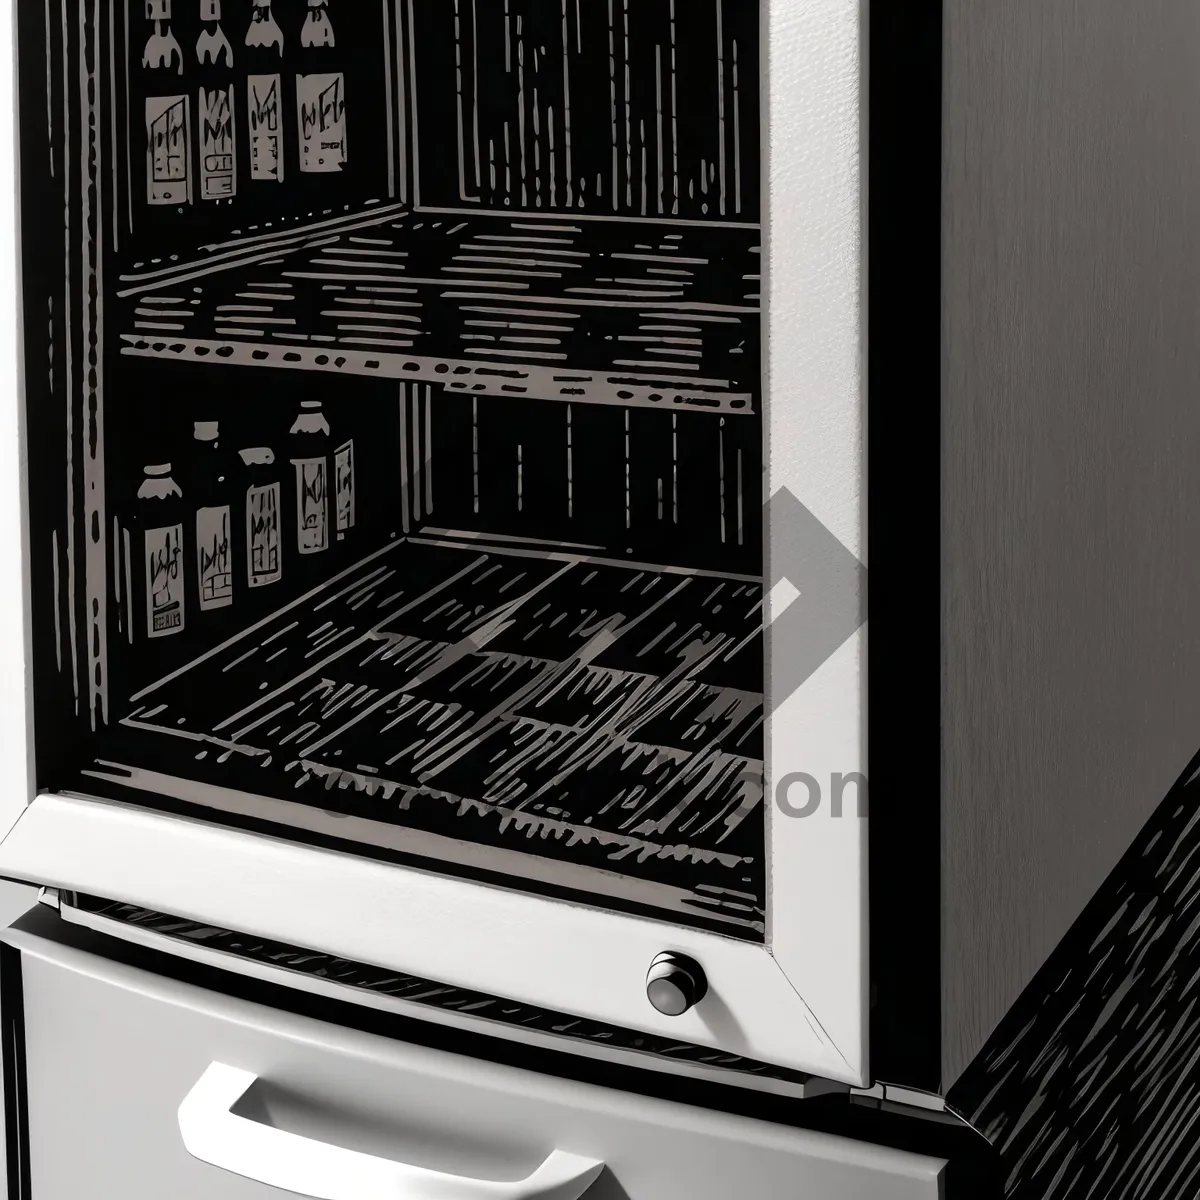 Picture of Modern Kitchen Appliances: Stove, Dishwasher, Refrigerator